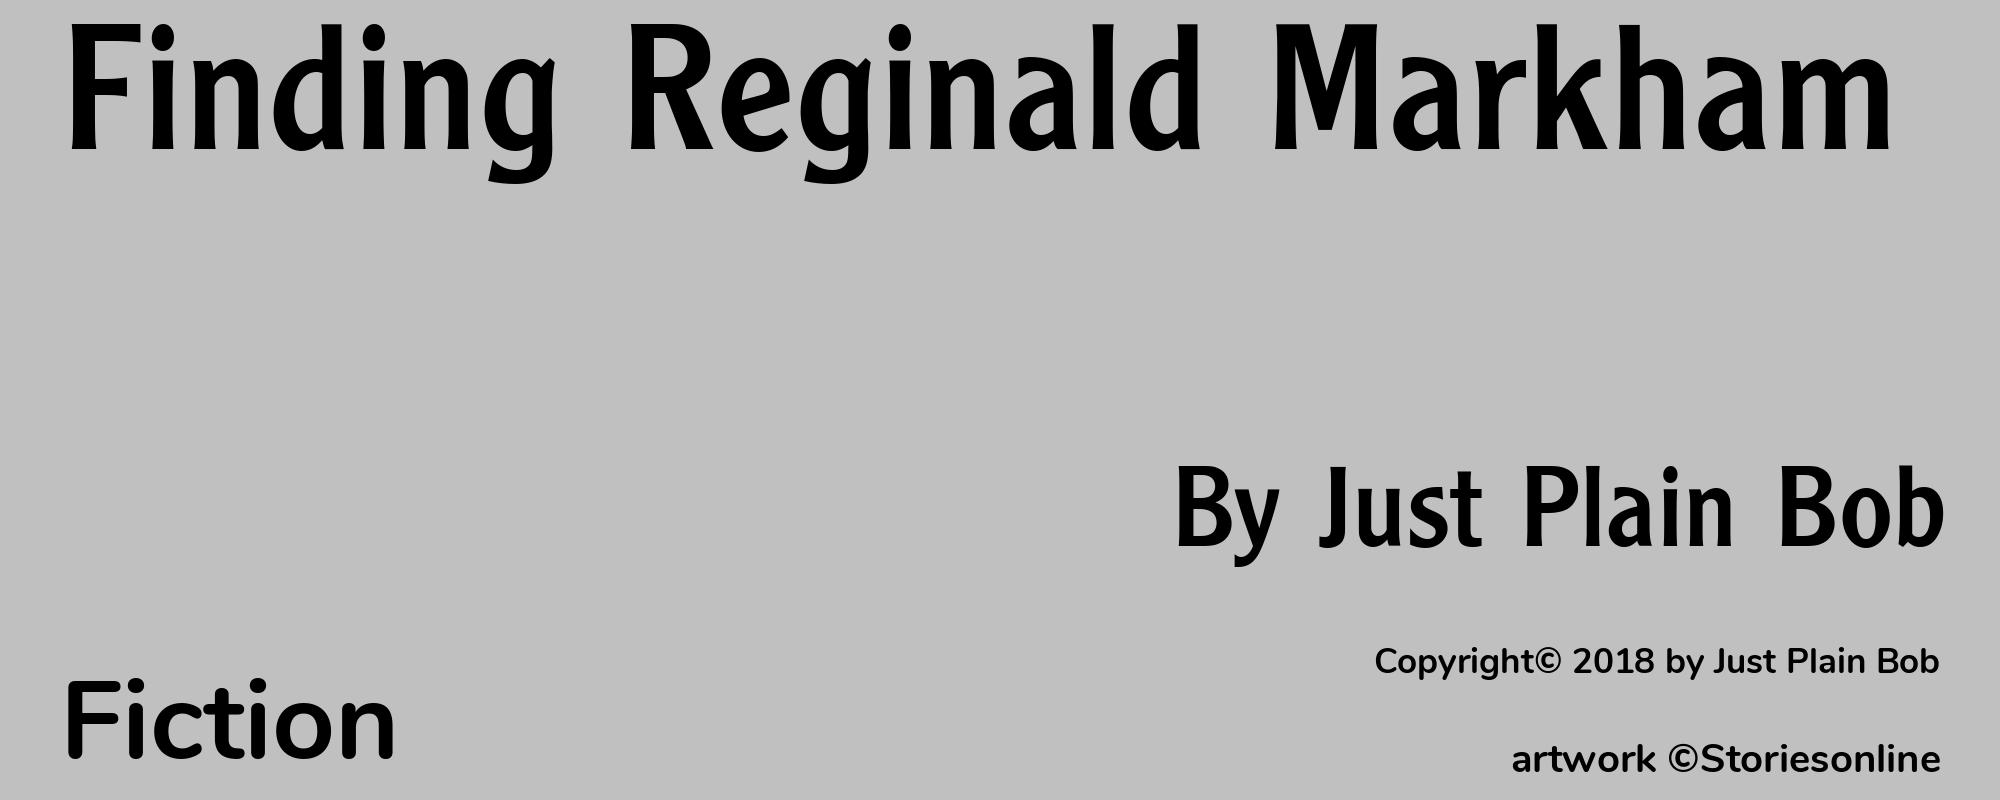 Finding Reginald Markham - Cover